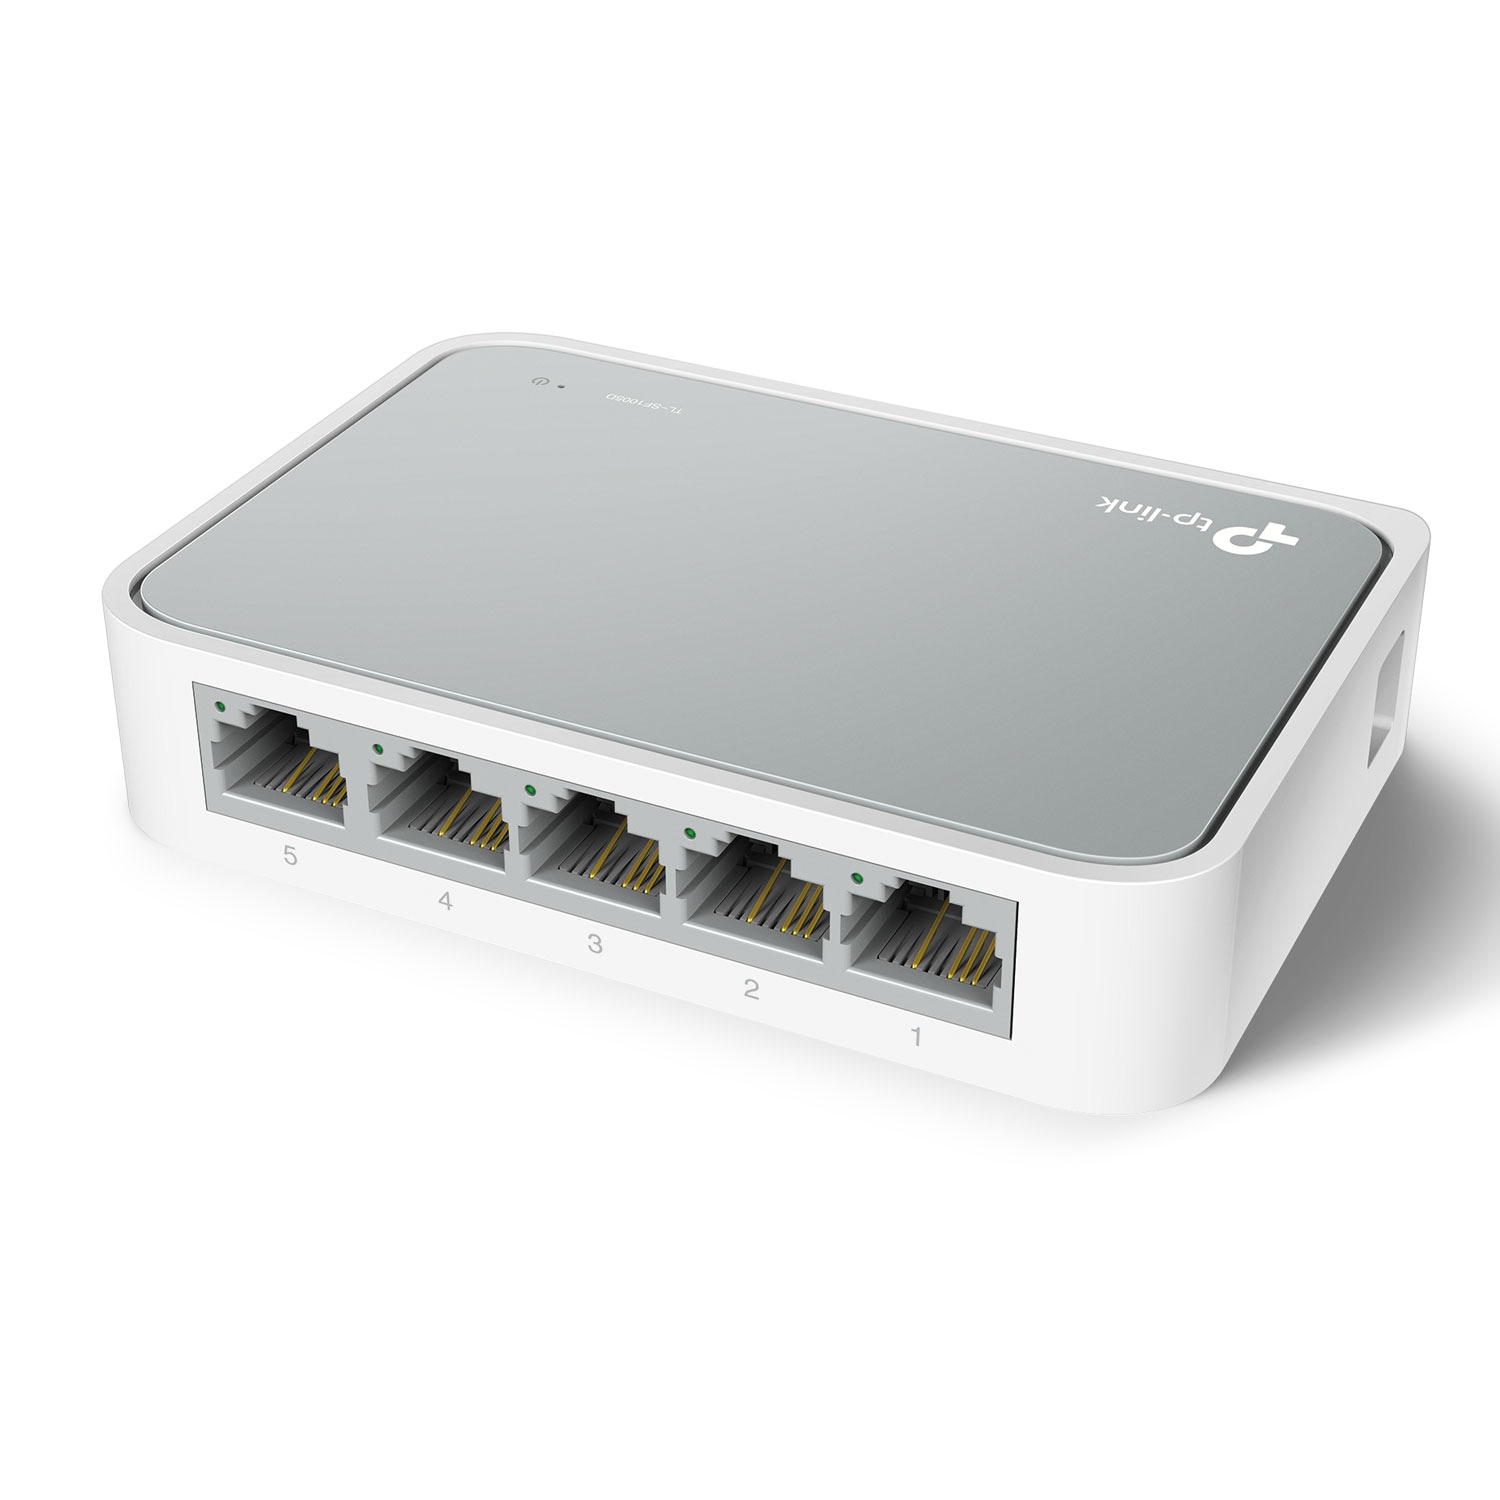 TP-Link WLAN-Router »TP-Link SF1005D, 5-Port Desktop-Switch« ➥ 3 Jahre XXL  Garantie | UNIVERSAL